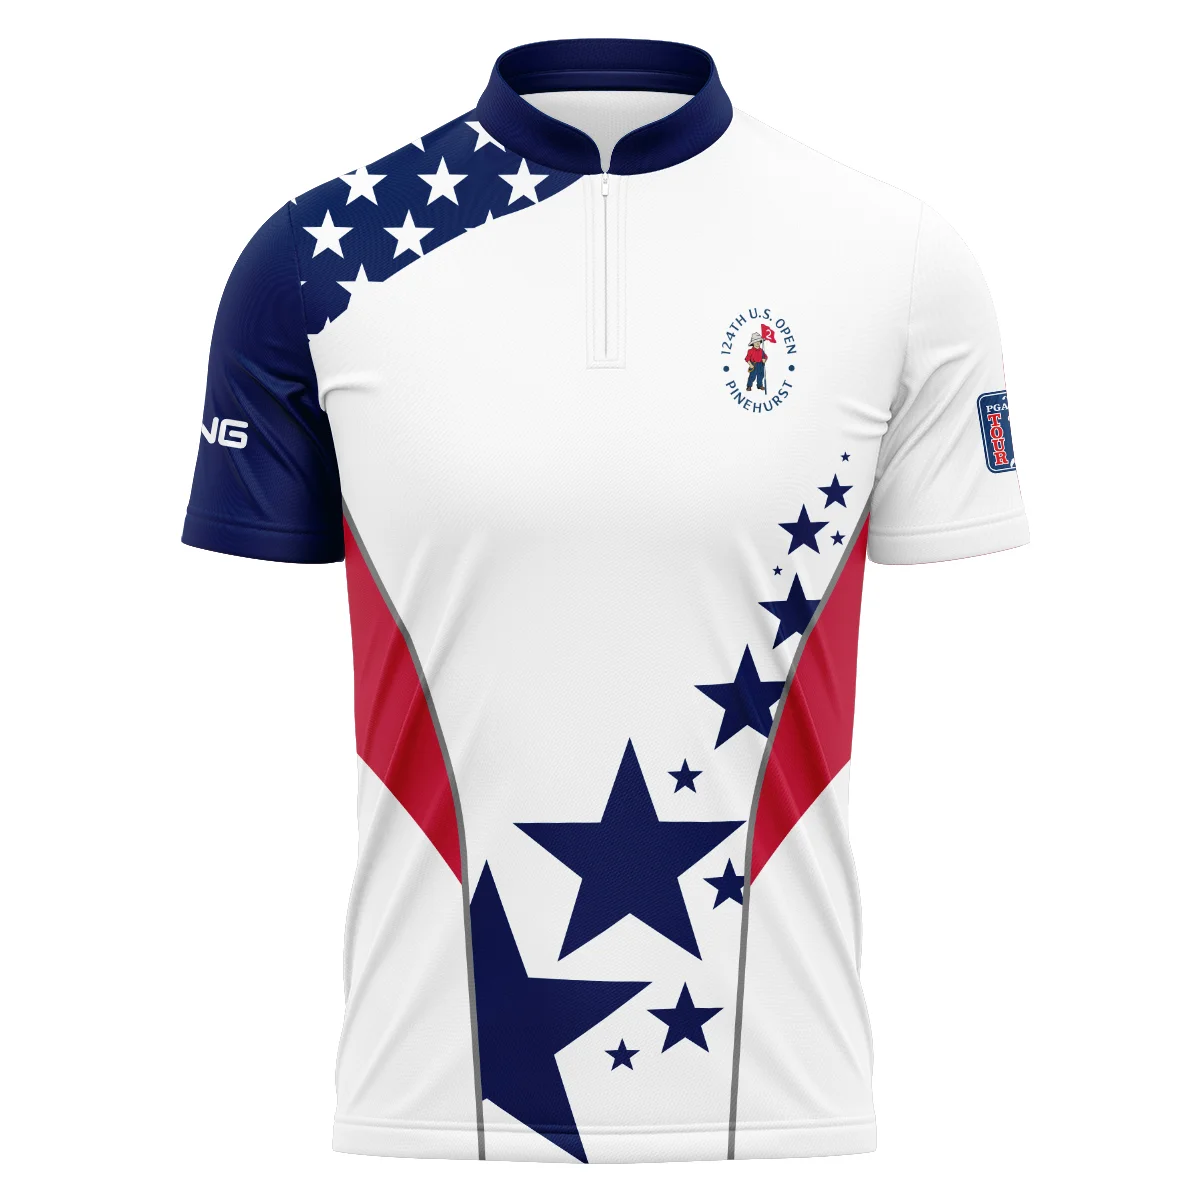 124th U.S. Open Pinehurst Ping Stars US Flag White Blue Polo Shirt Mandarin Collar Polo Shirt